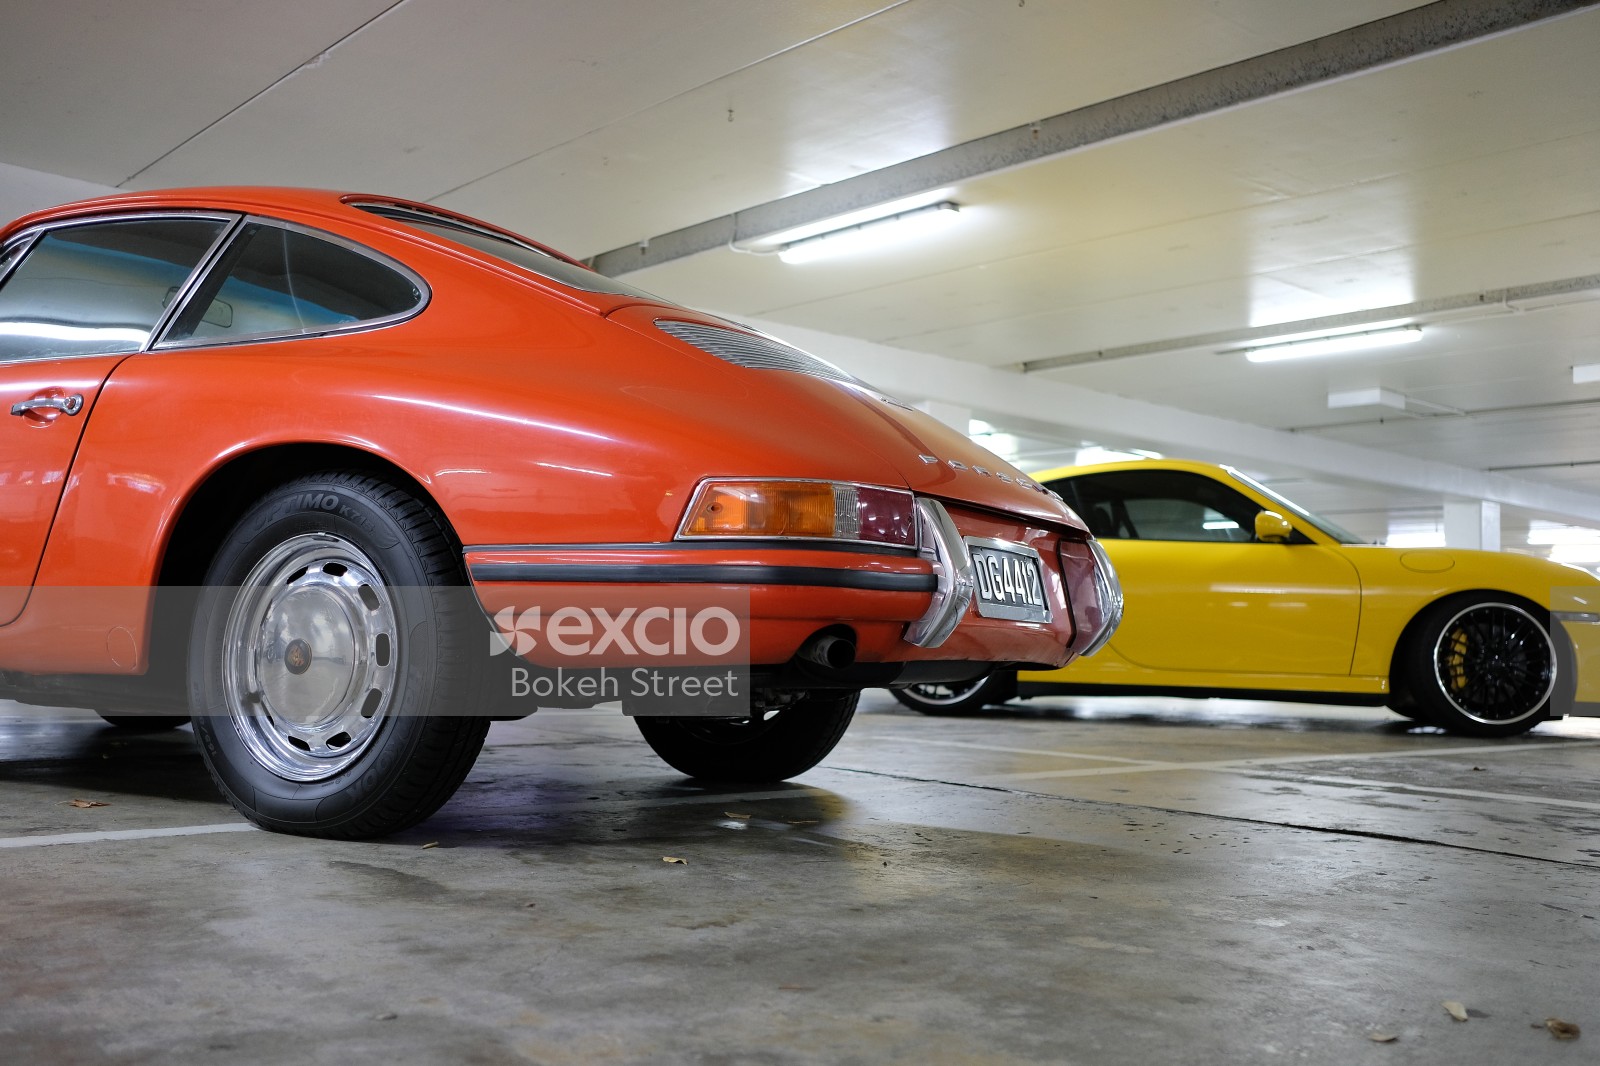 Classic orange and modern yellow Porsche